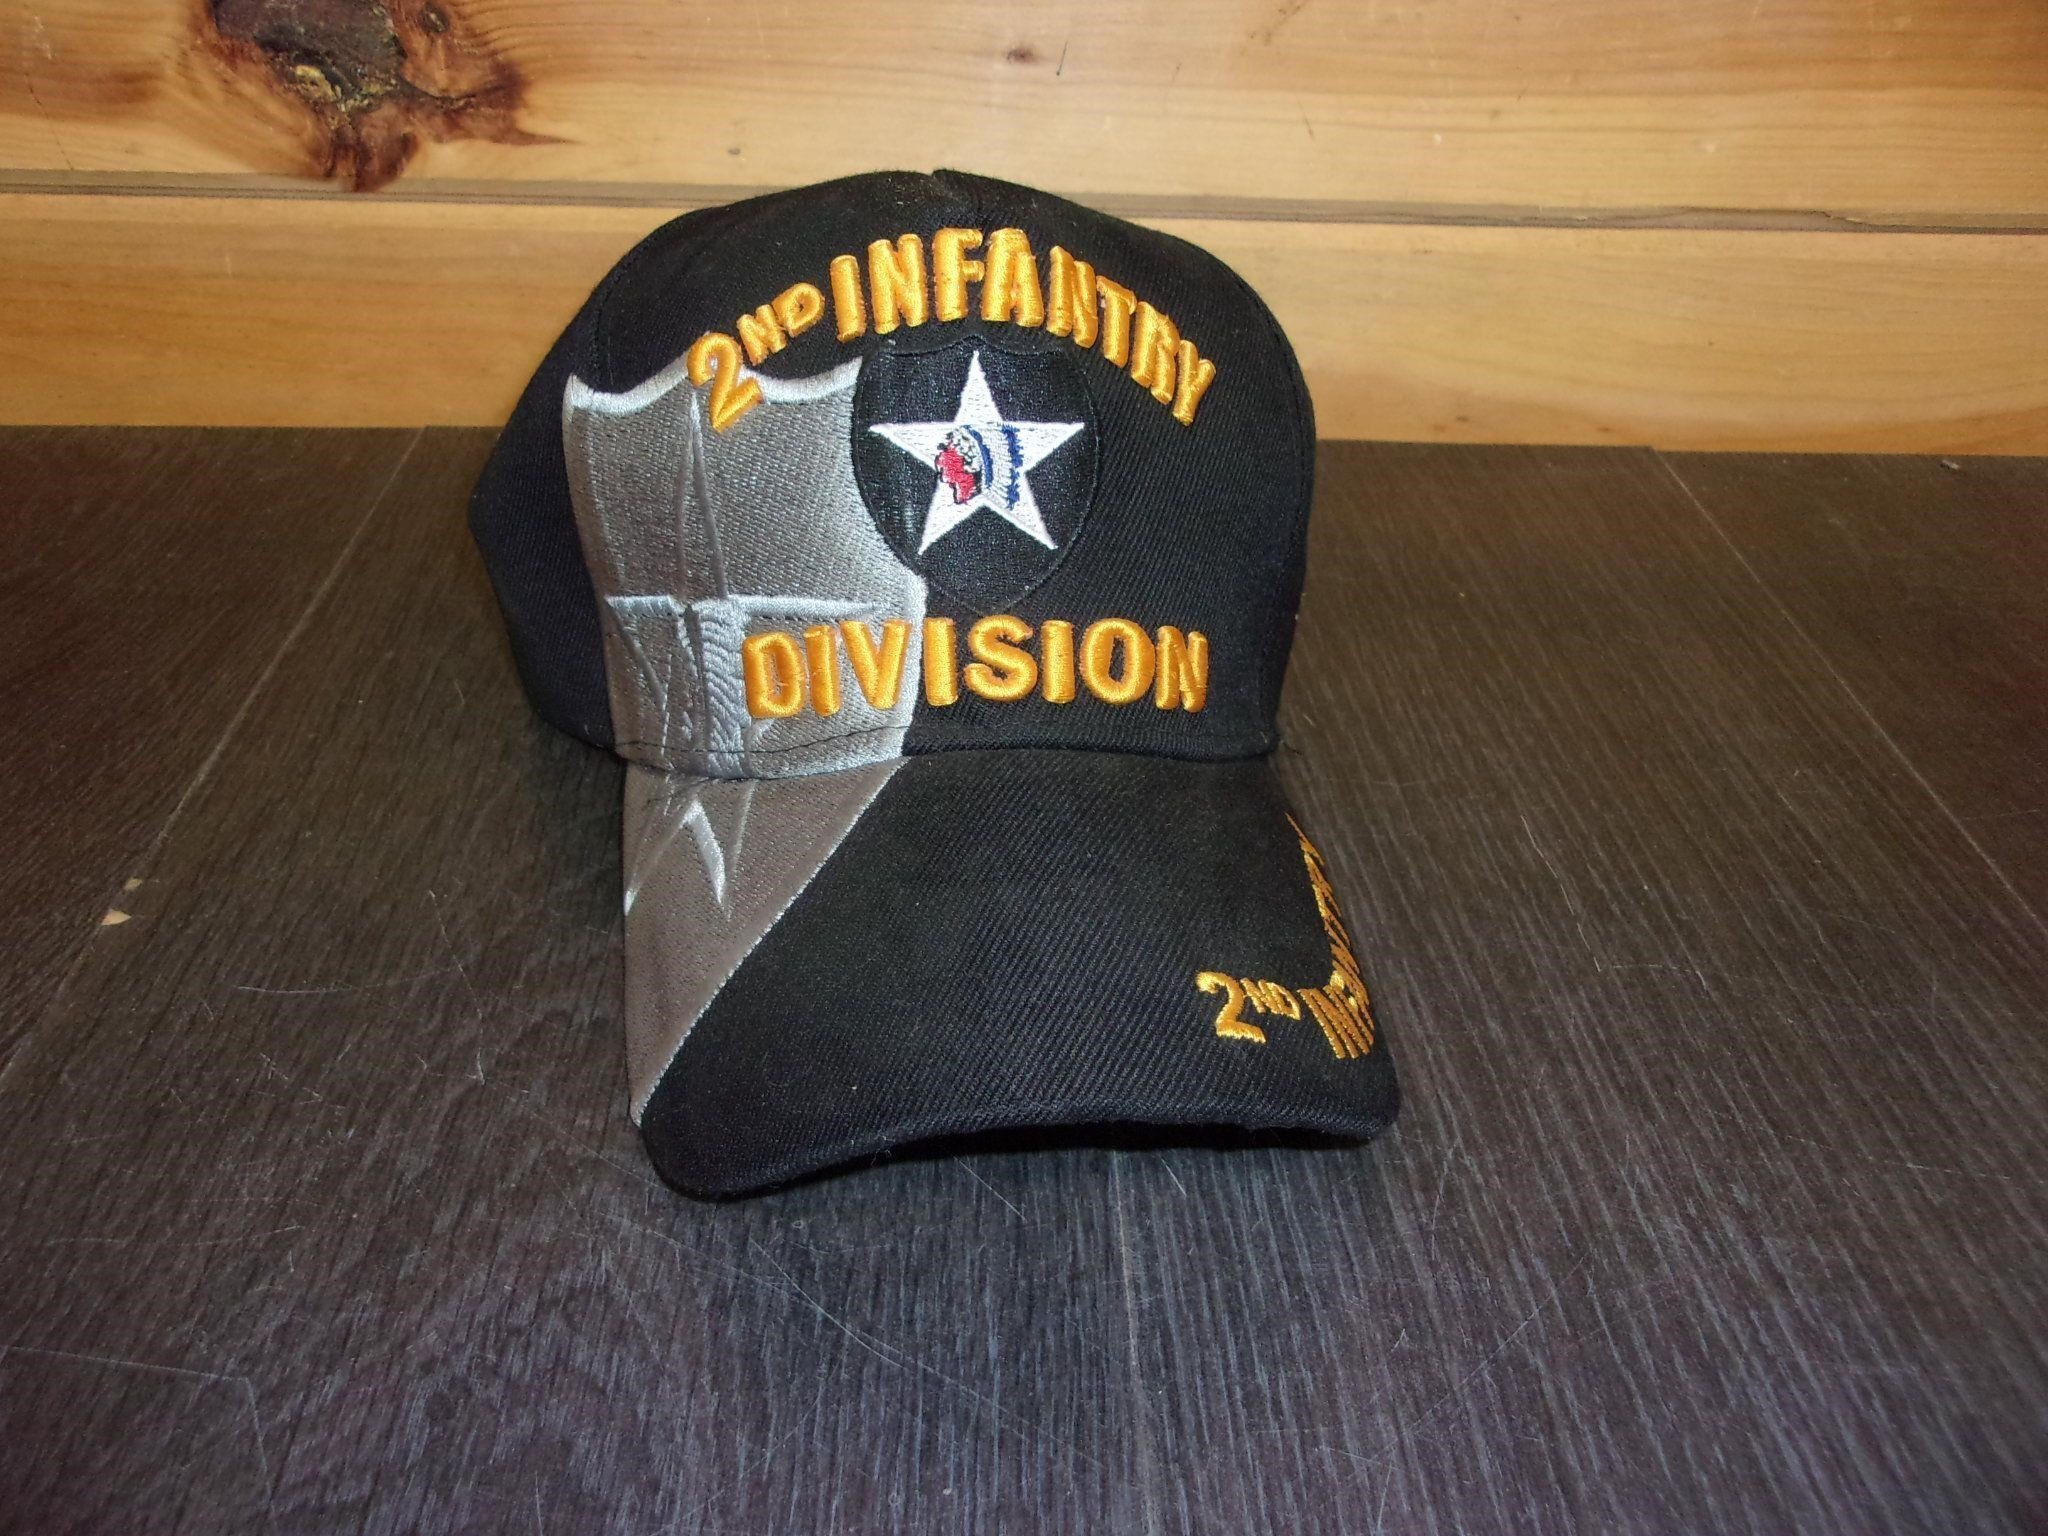 NOS hat 2nd division infantry